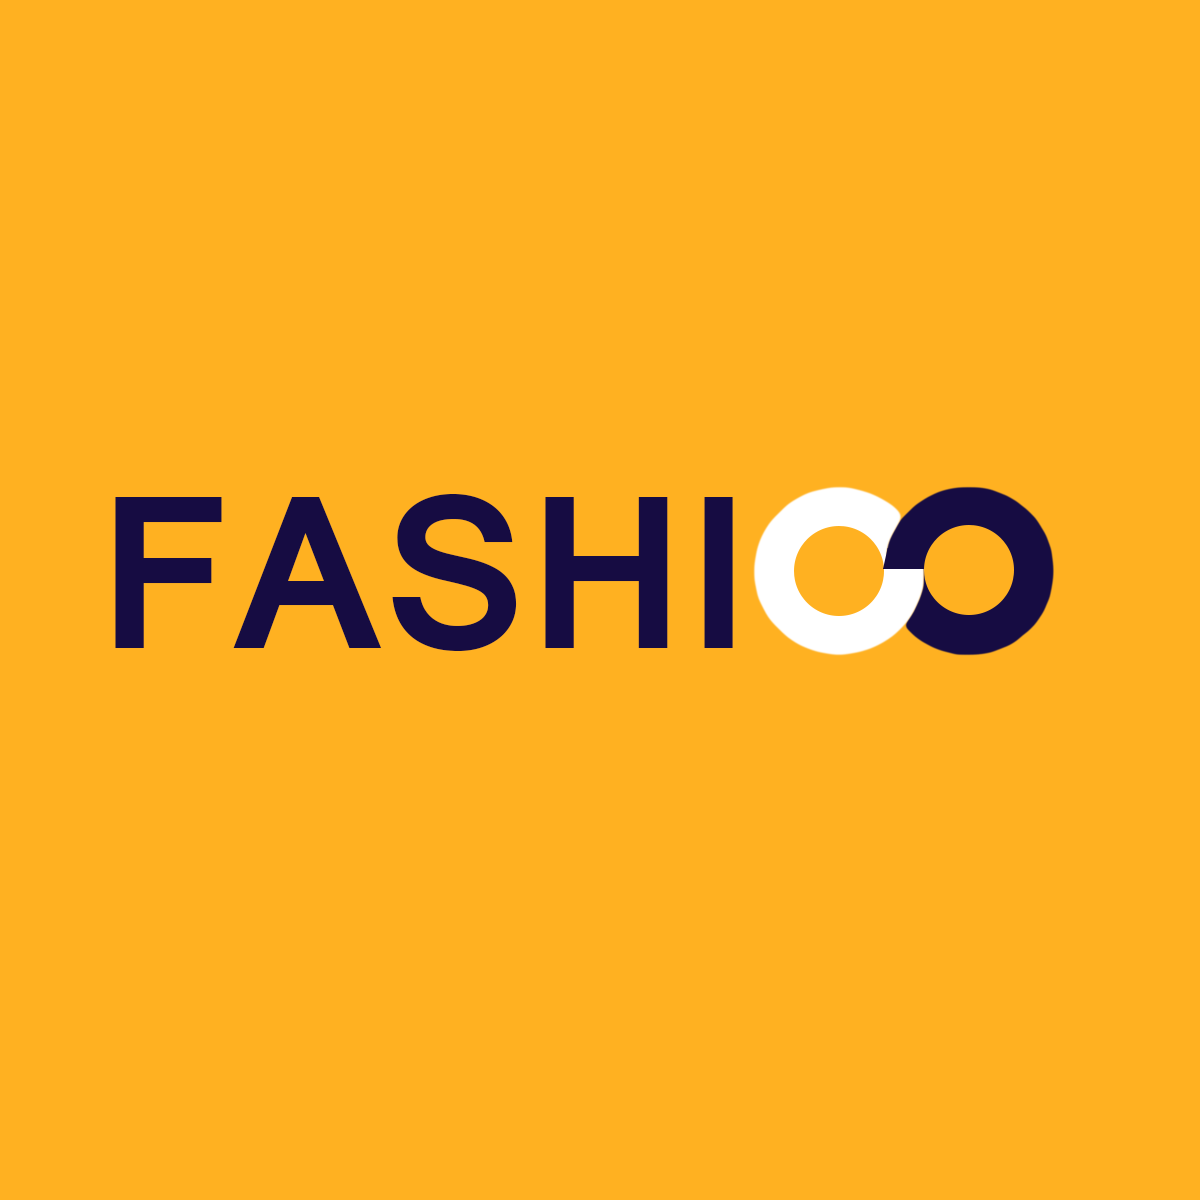  Website by Roniit   Fashioo logo